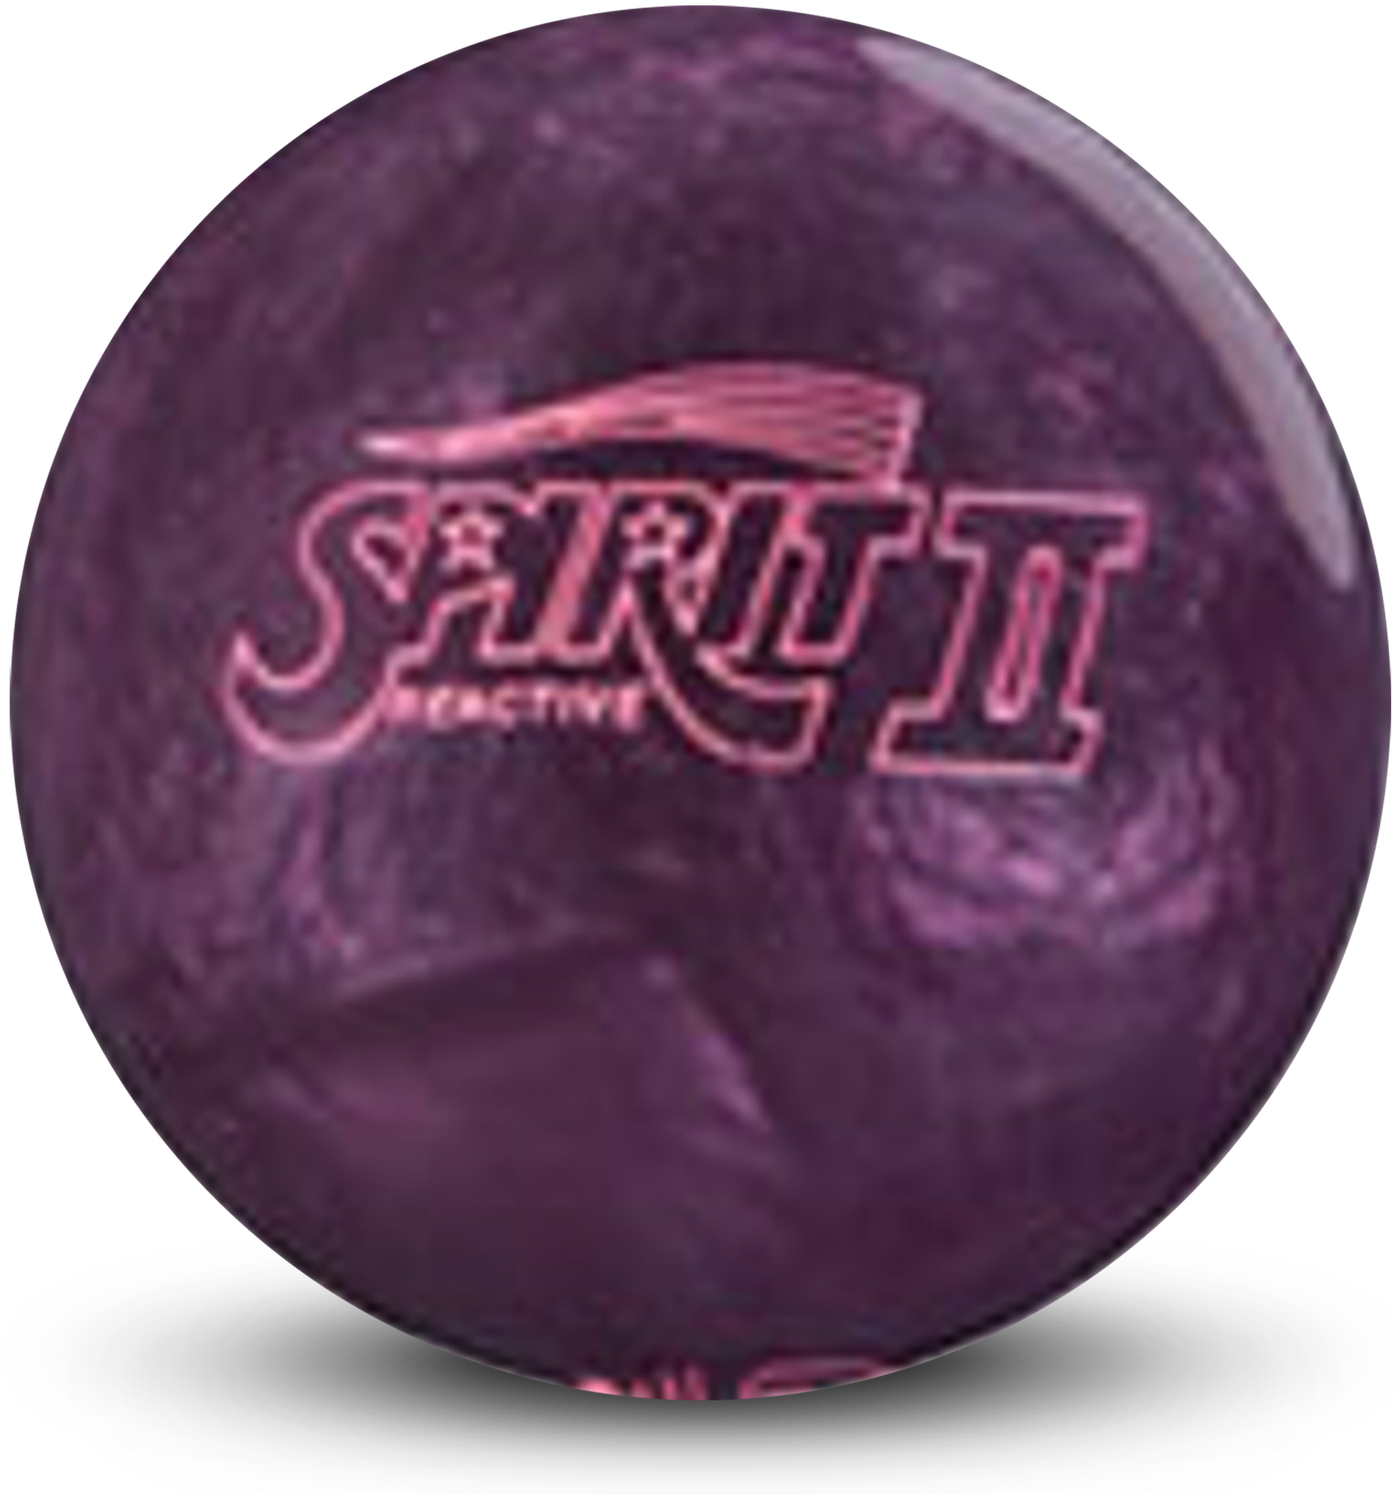 Spirit II Bowling Ball